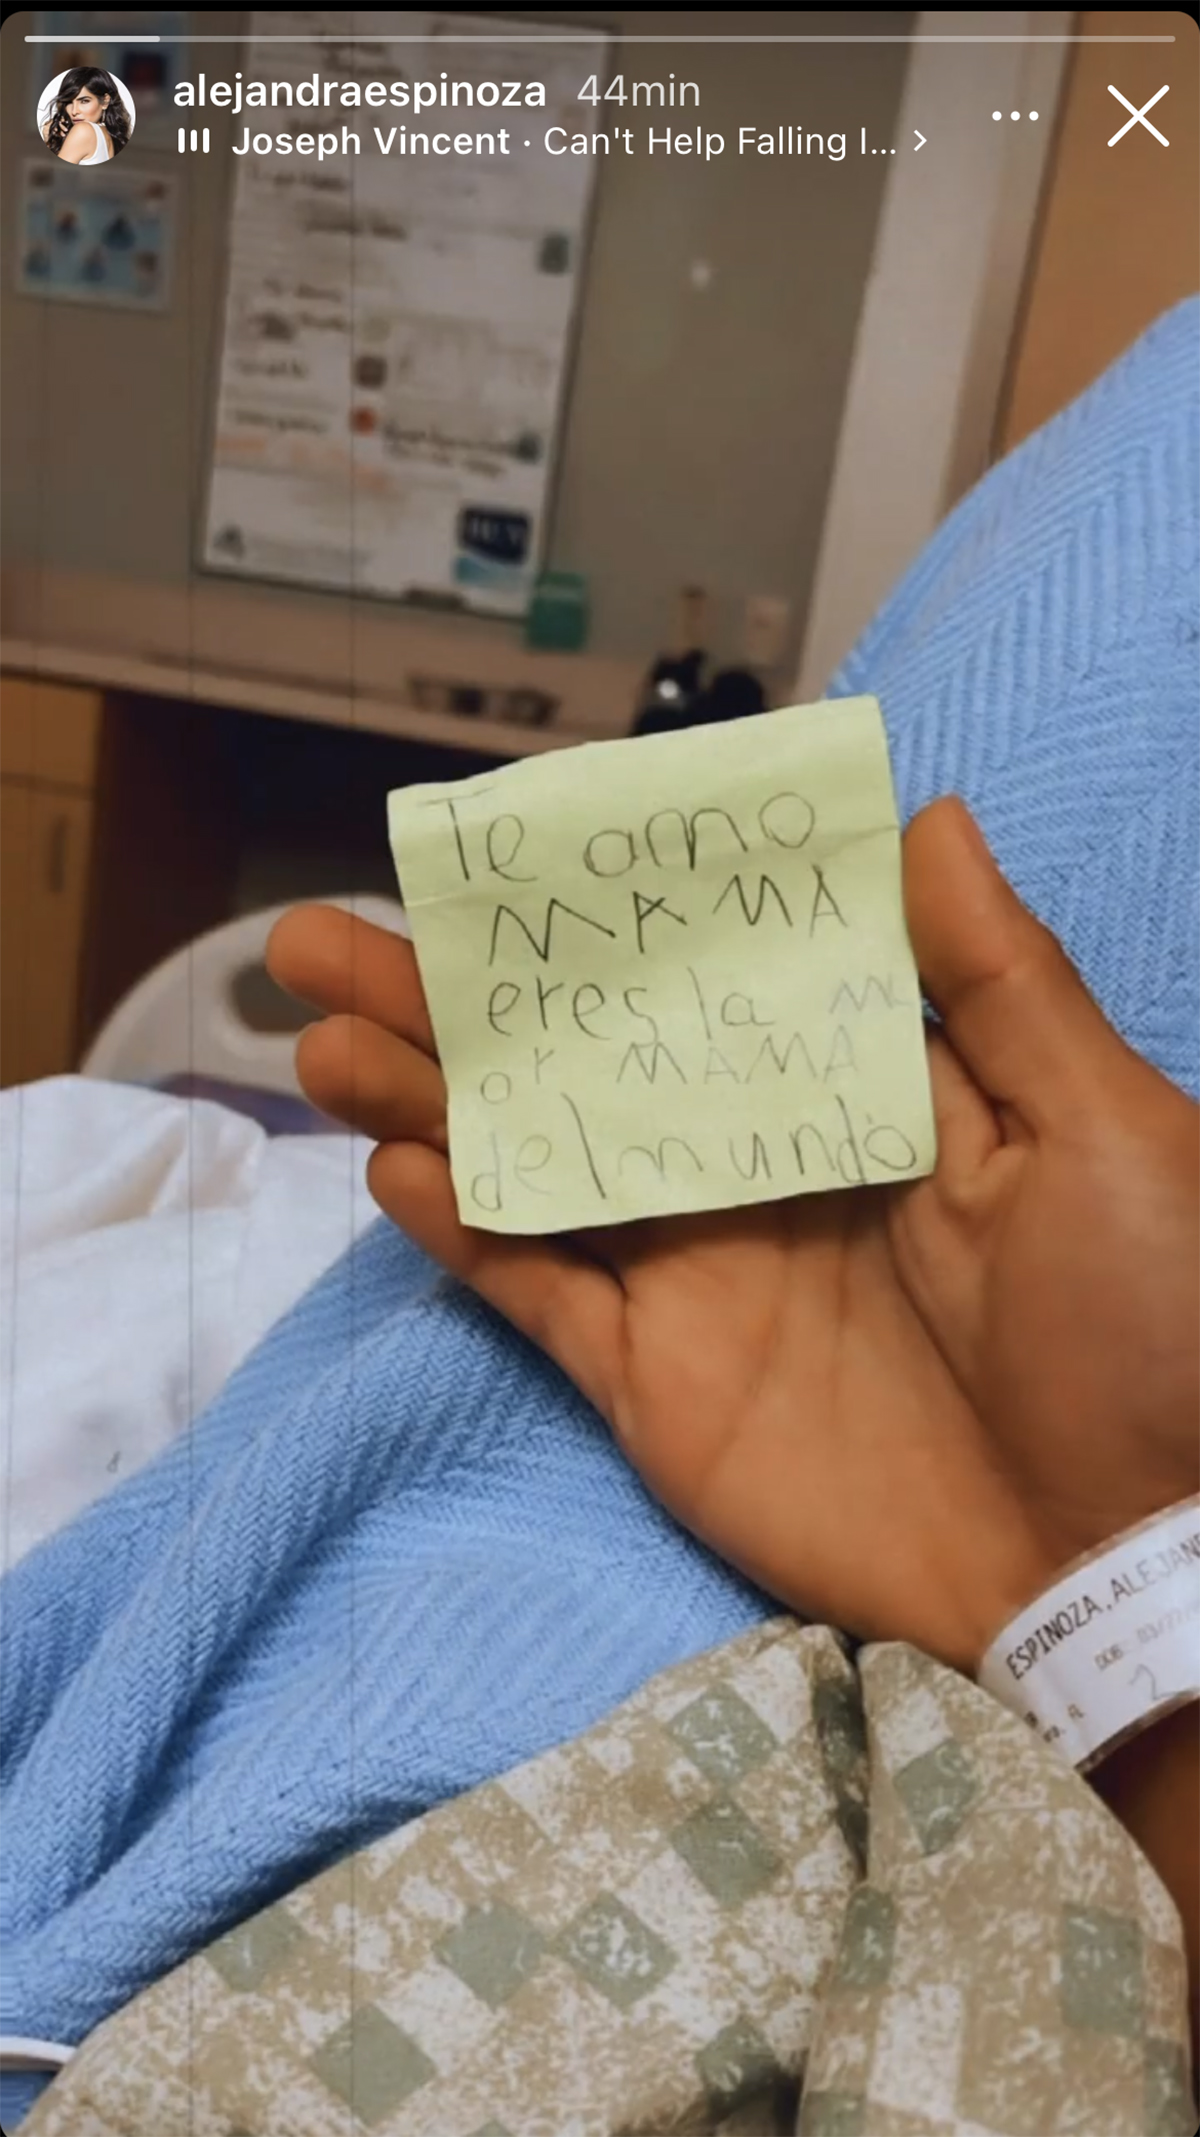 Alejandra Espinoza's message that revealed that she was hospitalized